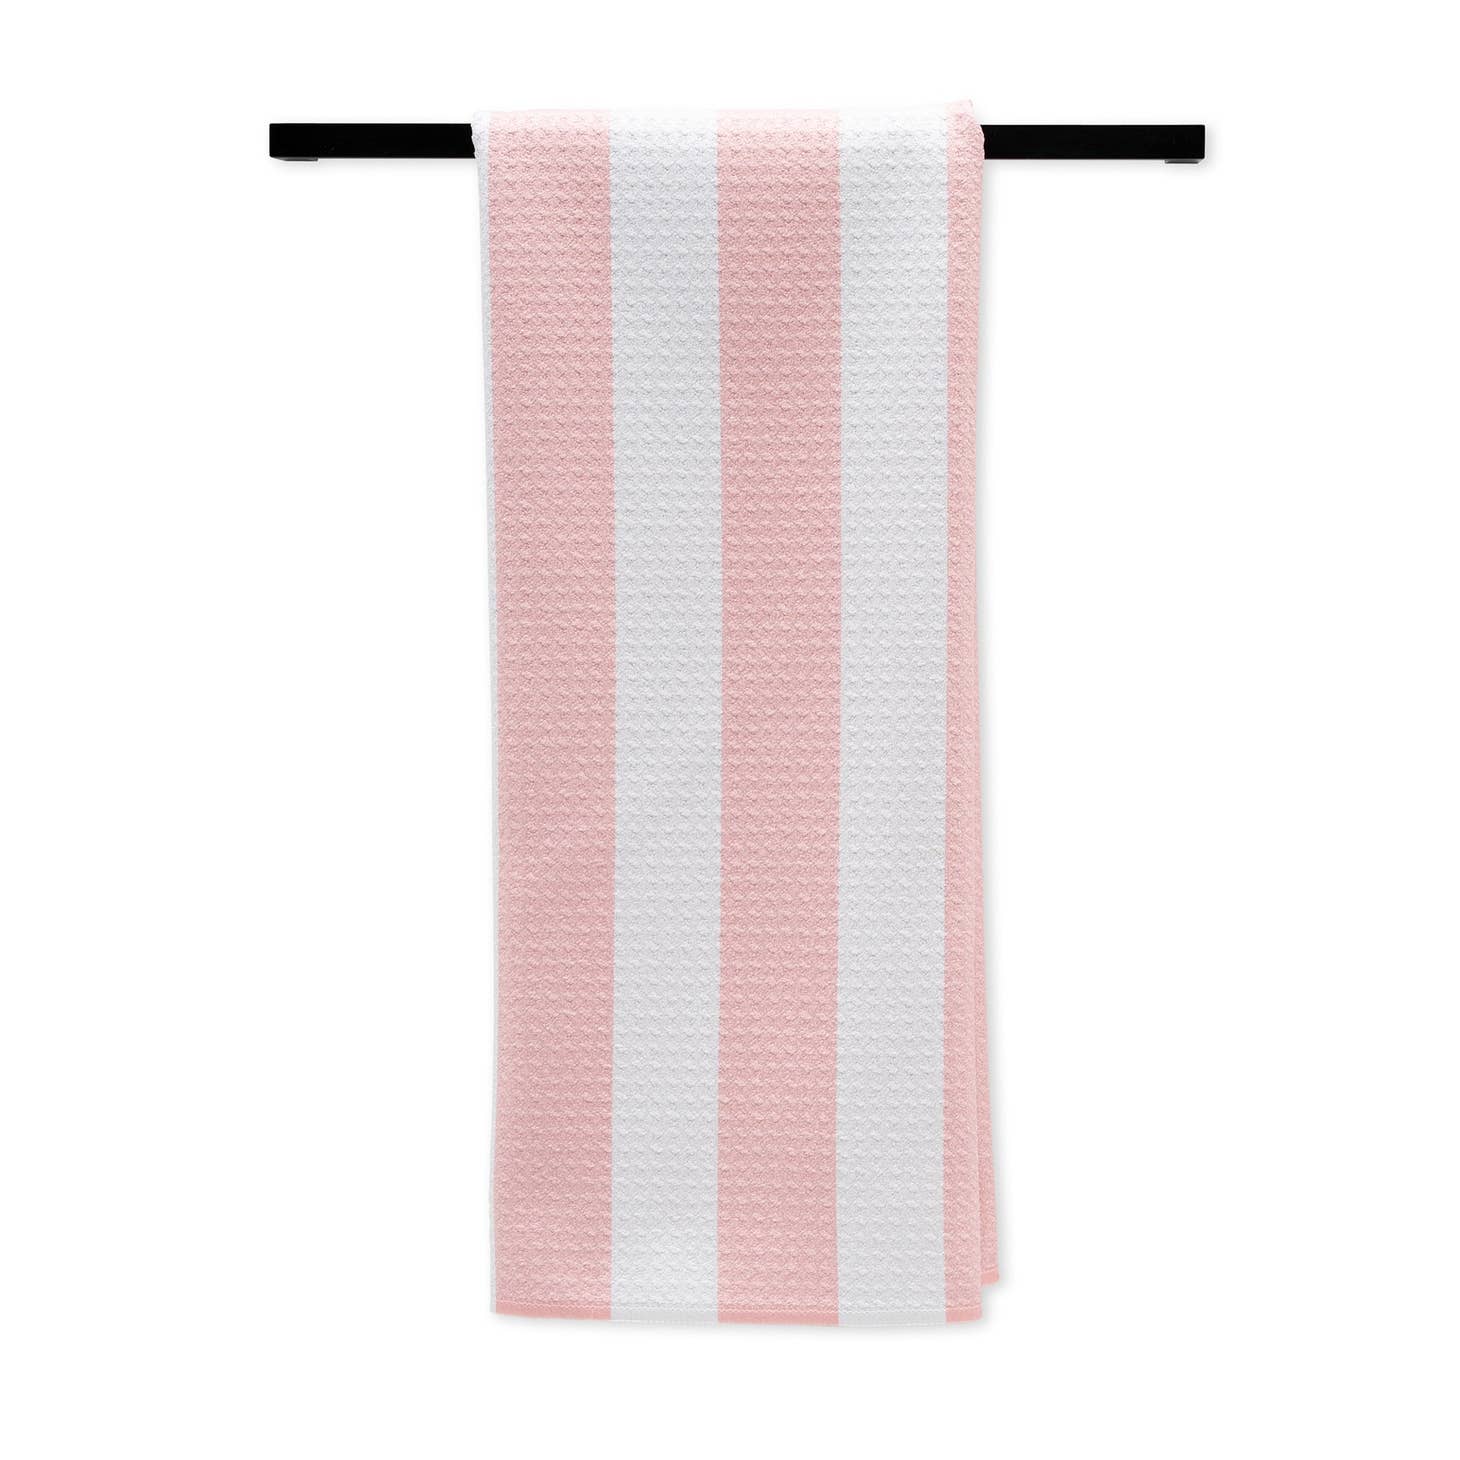 Bold Pink Geometry Kitchen Tea Towel - Favorite Little Things Co